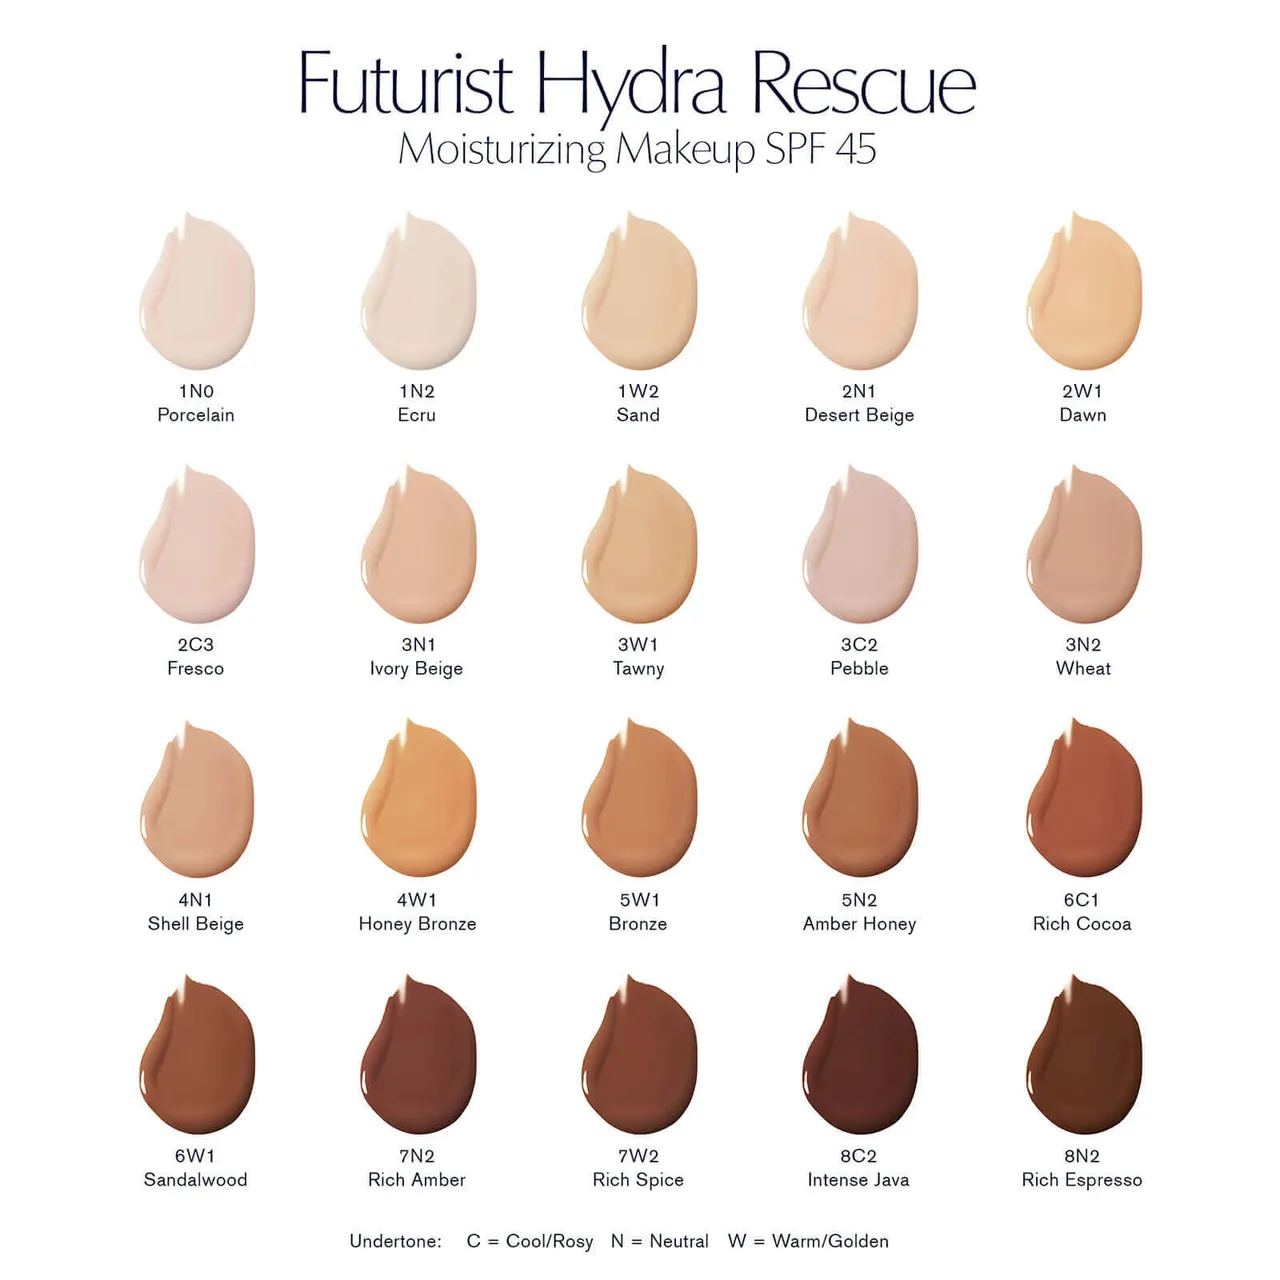 Estée Lauder Futurist Hydra Rescue Moisturizing Makeup Foundation SPF45 (Various Shades) - 1N0 Porcelain